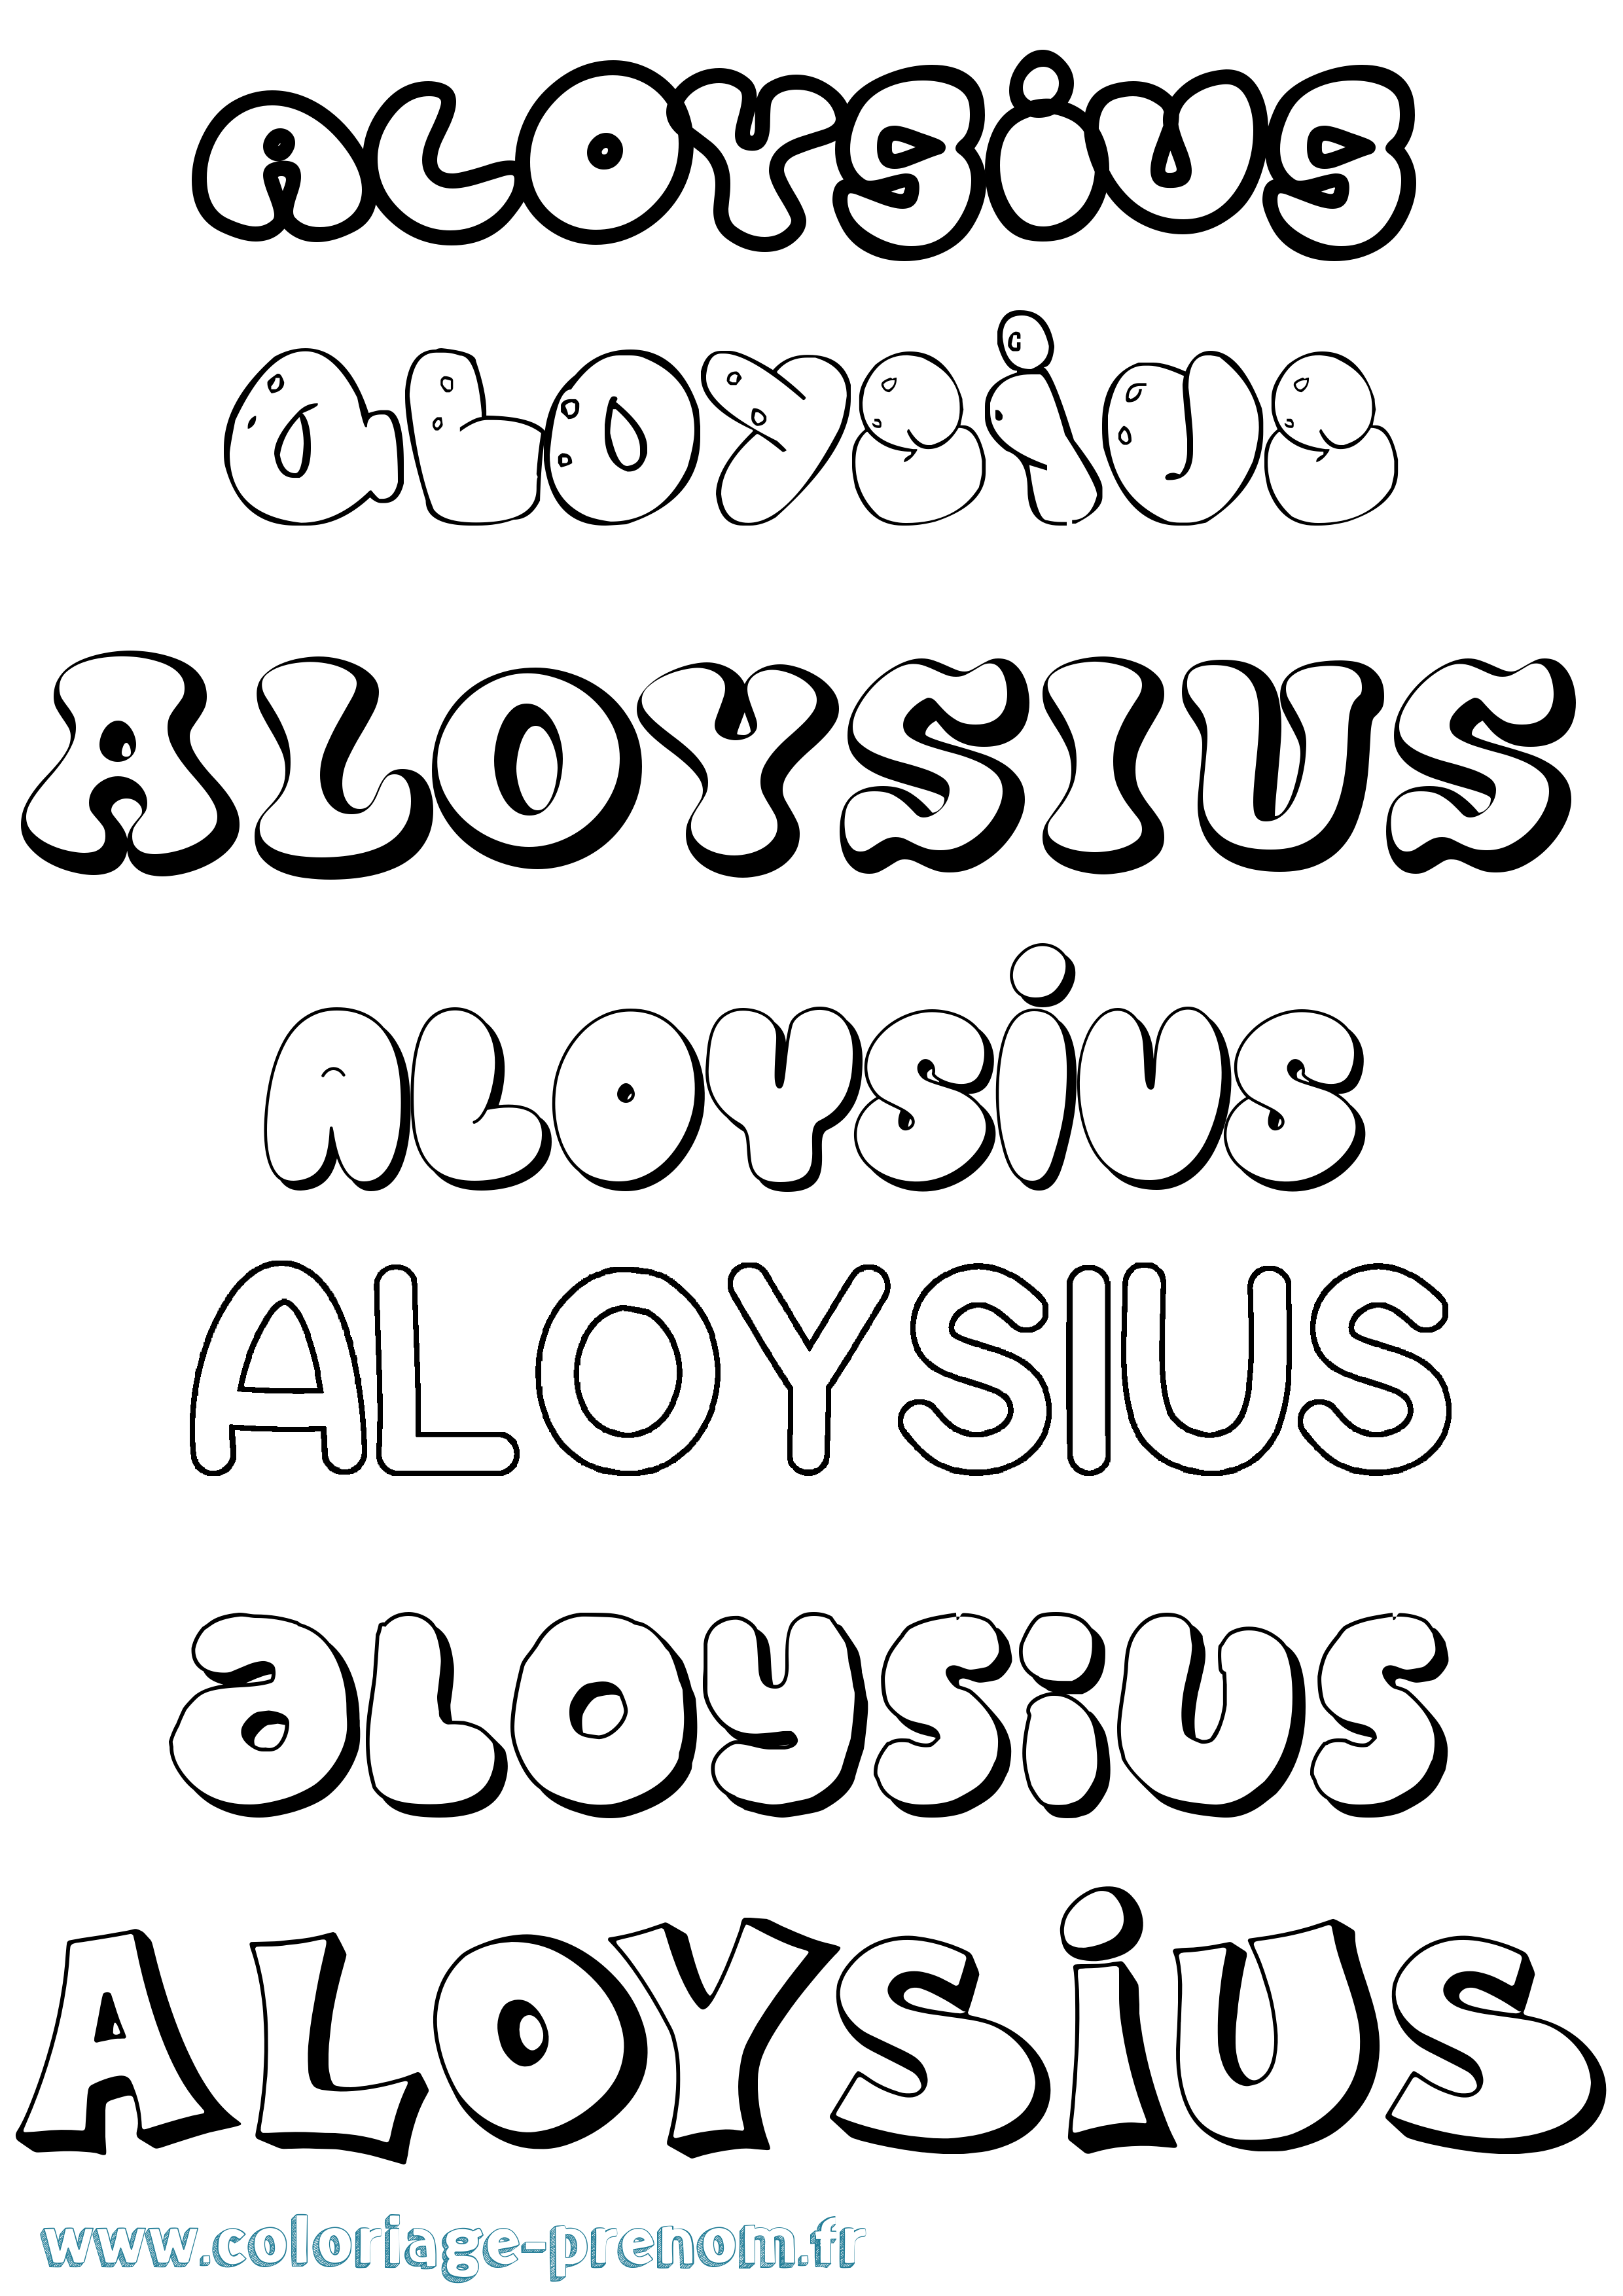 Coloriage prénom Aloysius Bubble